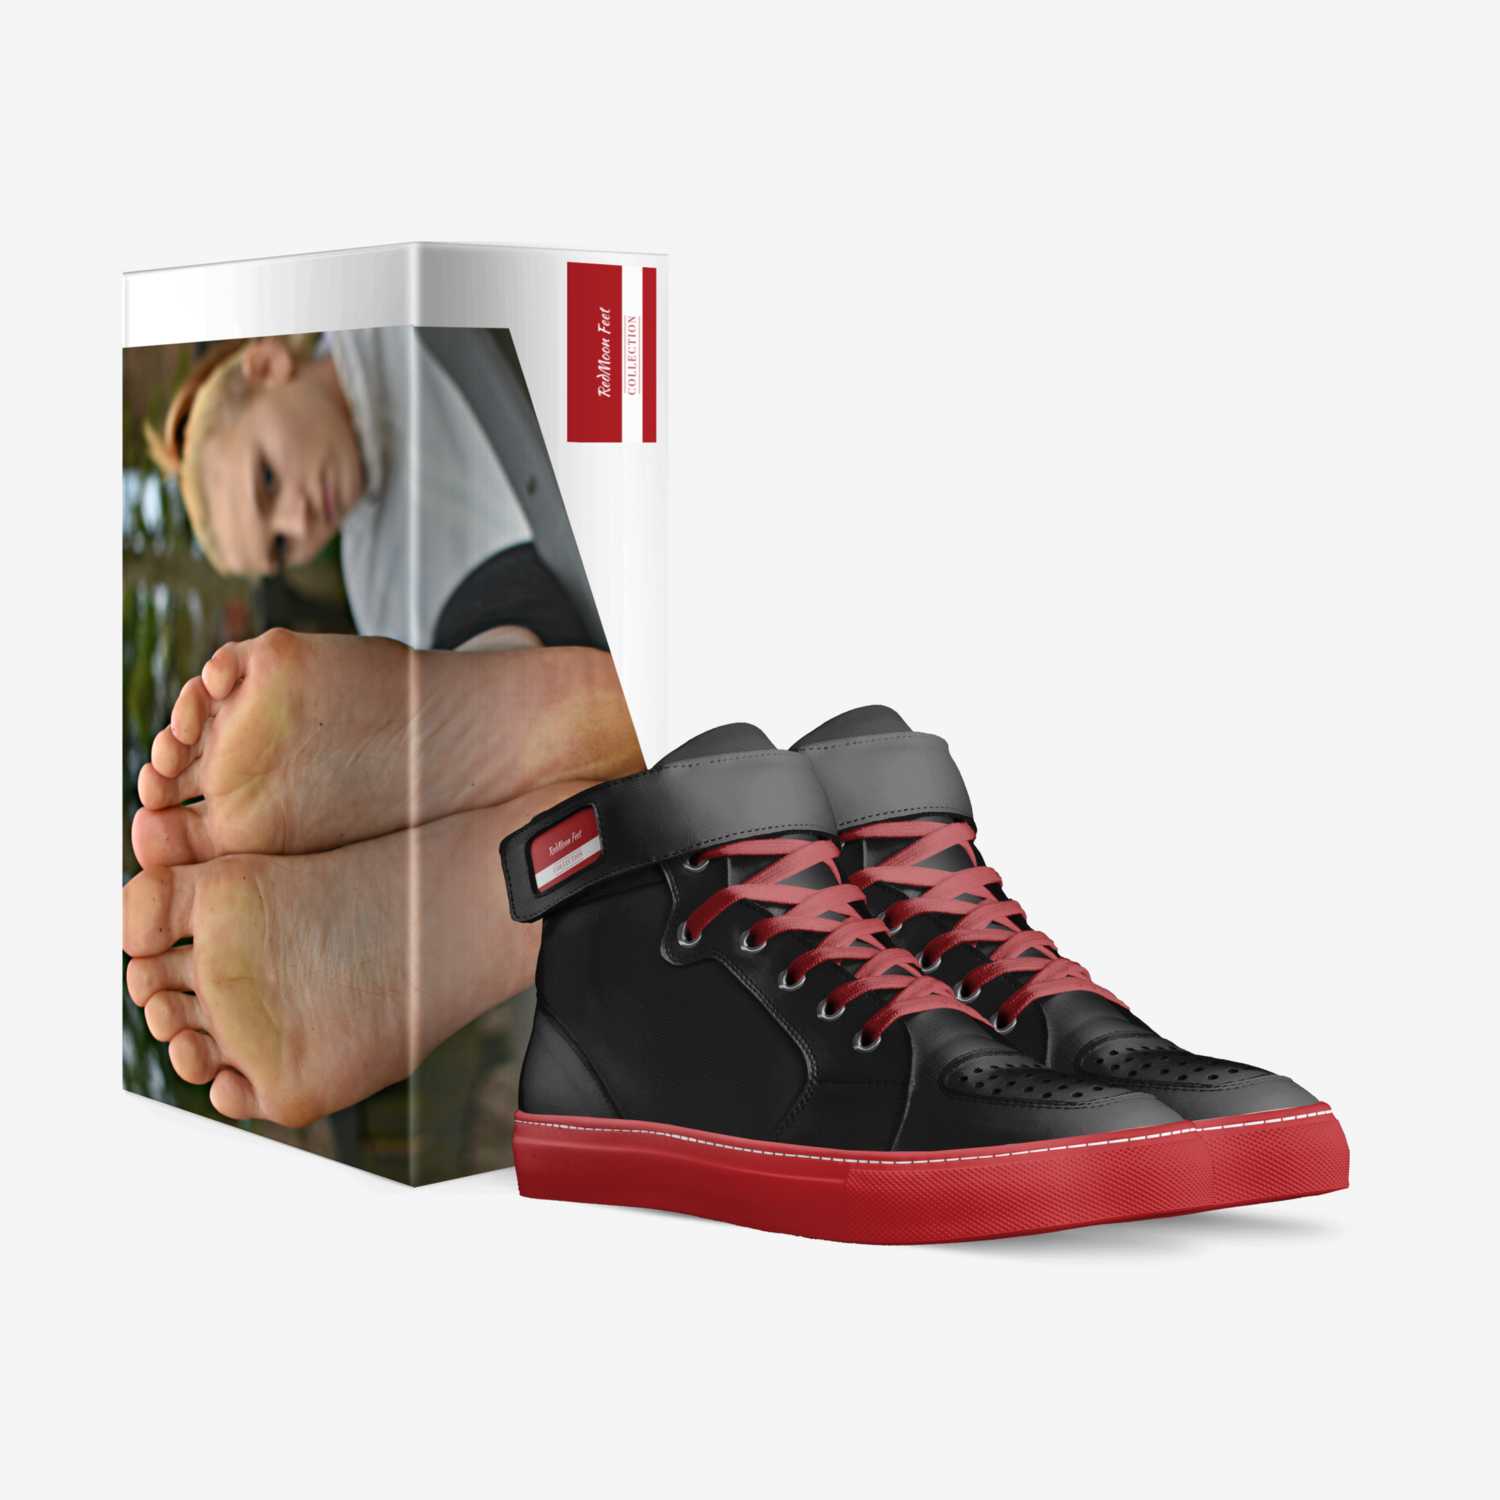 RedMoon Feet custom made in Italy shoes by Darien Portman | Box view